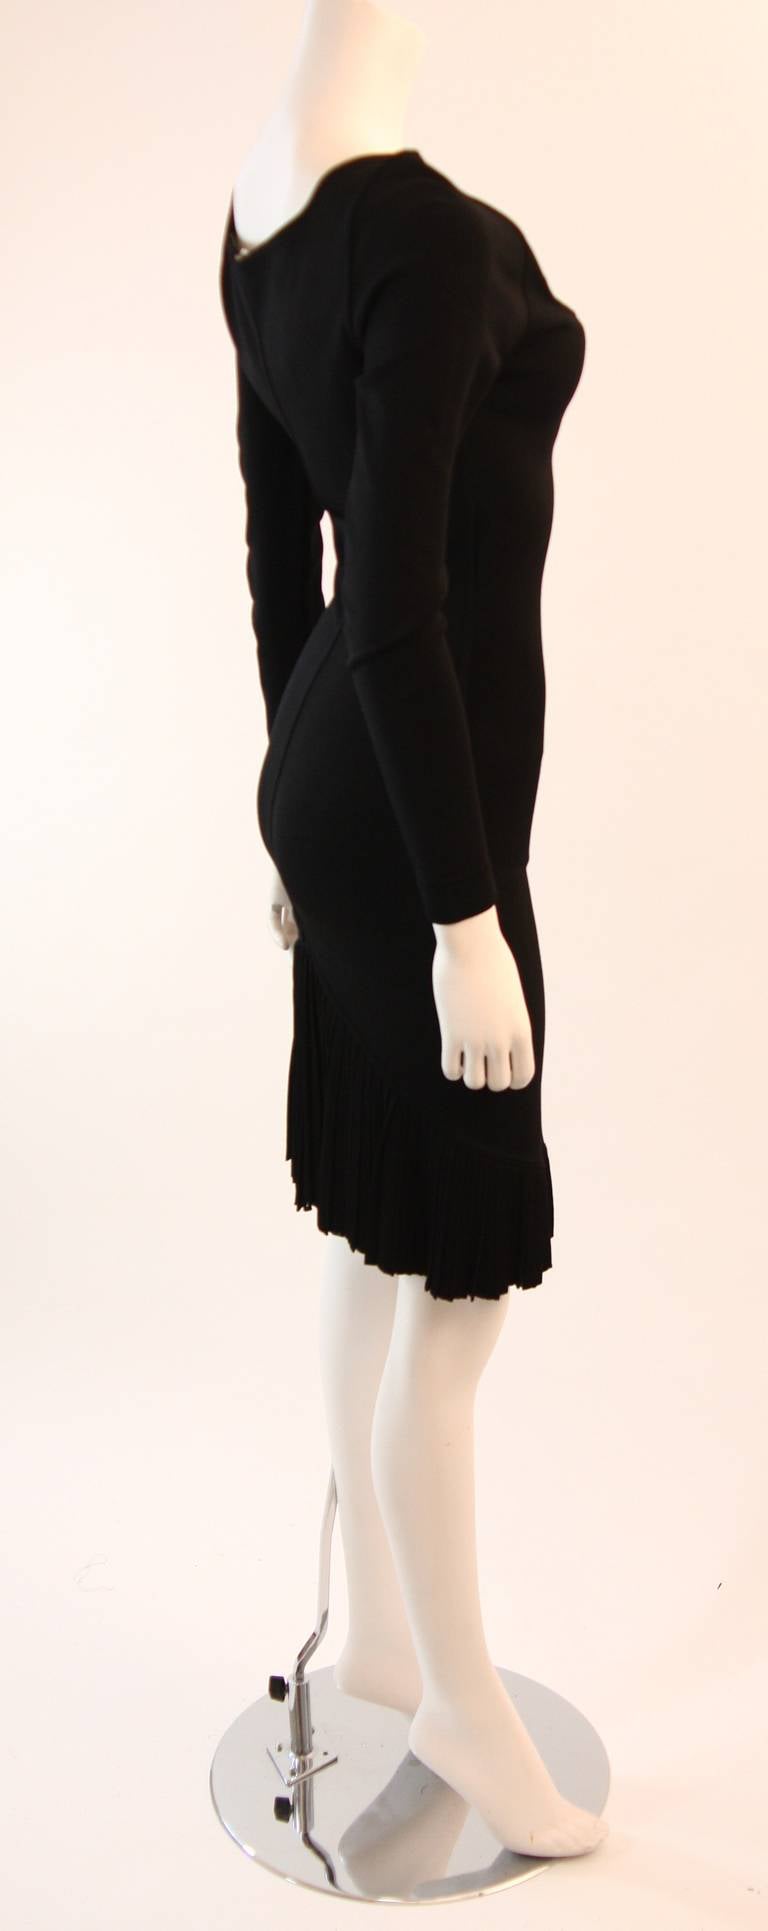 Marvelous Alaia Black Stretch Dress 2